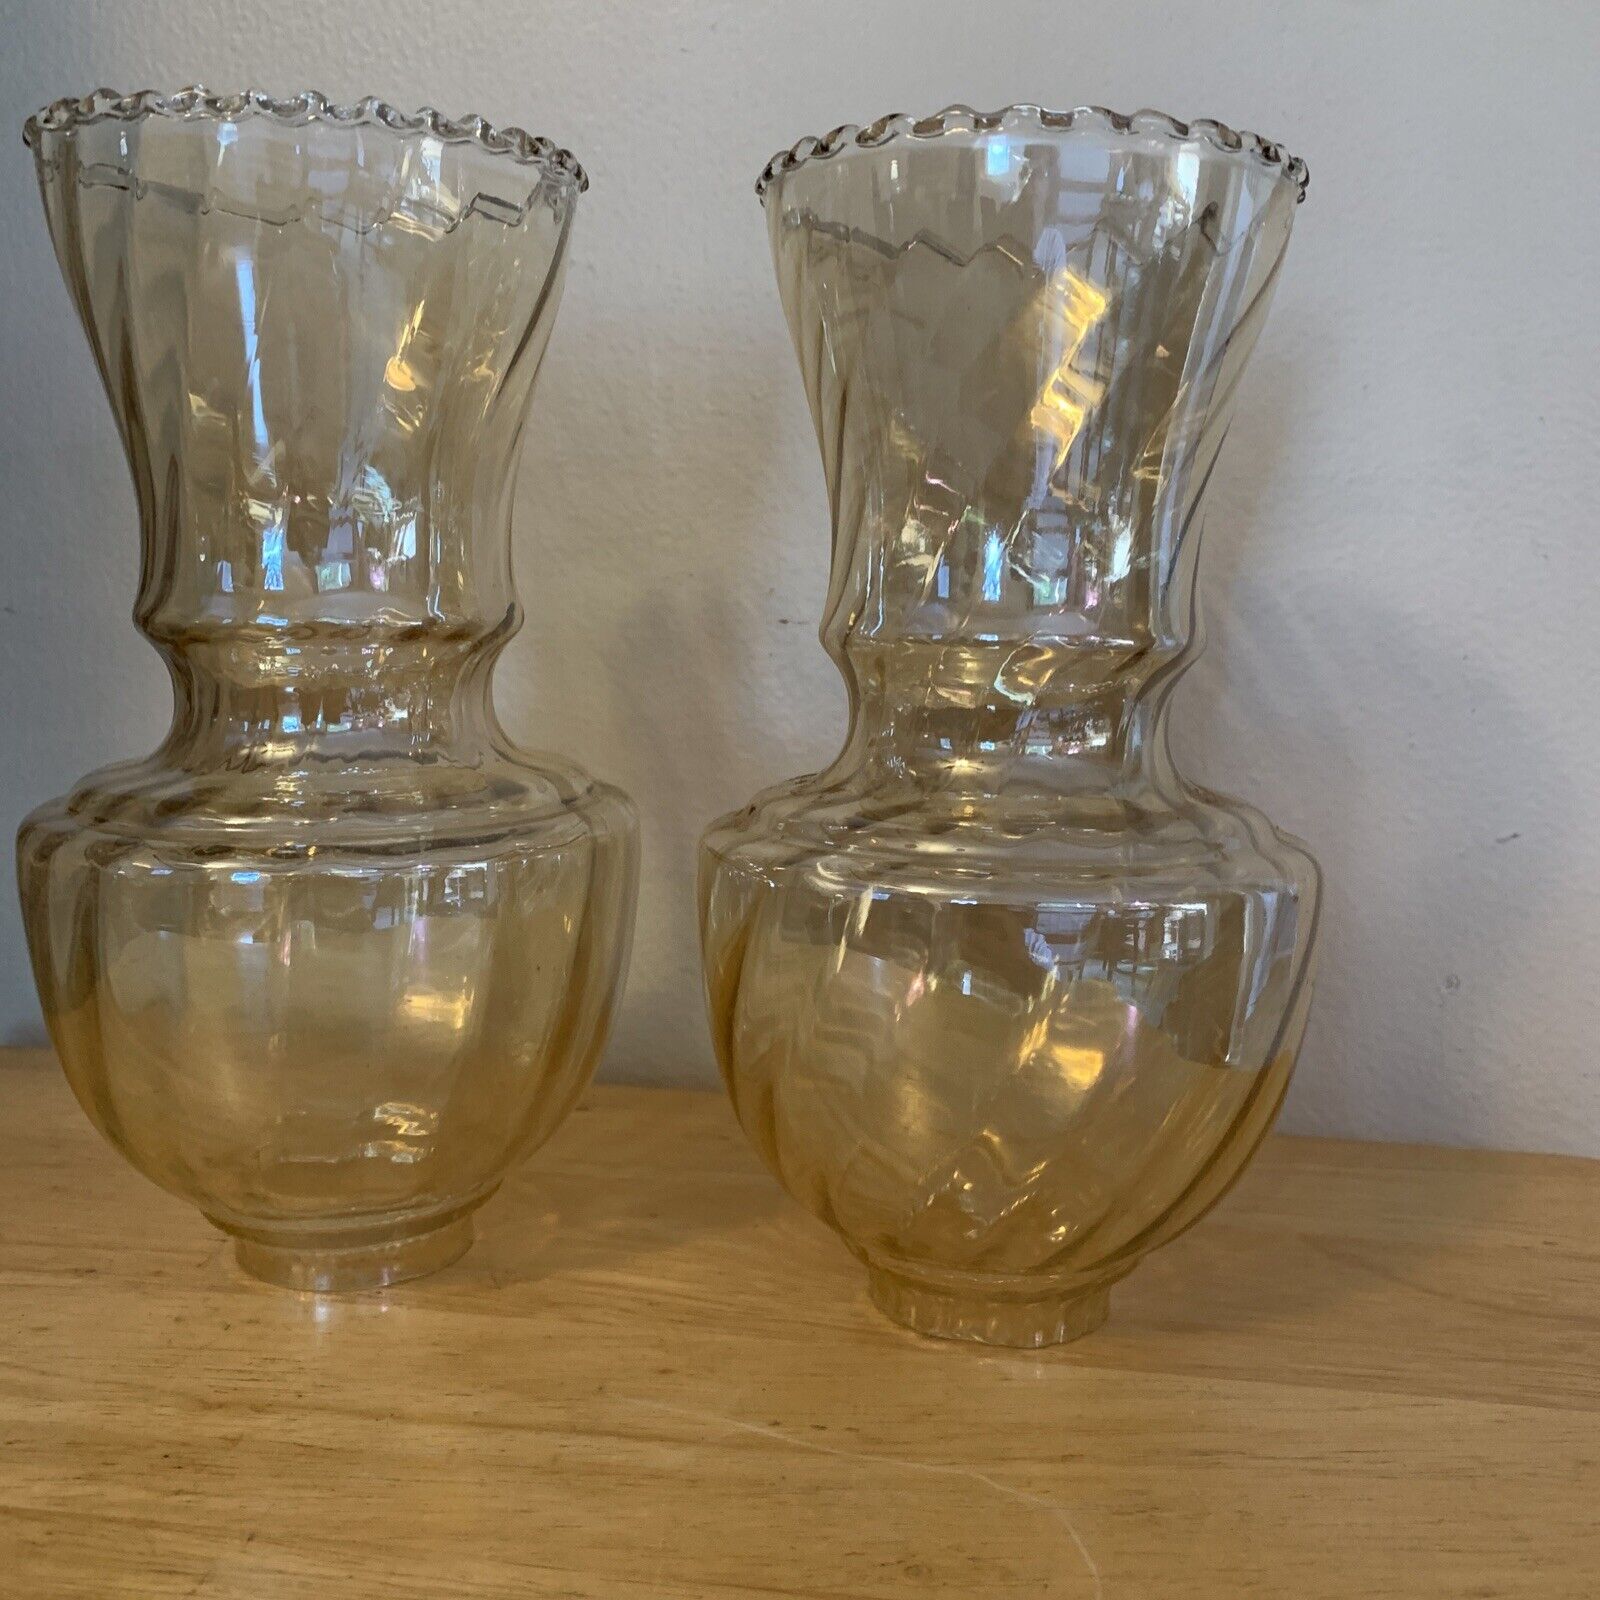 2 Vtg Peach Lustre Hurricane Lamp Shade Sconces  8.5” Tall 1.75”  Swirl Glass